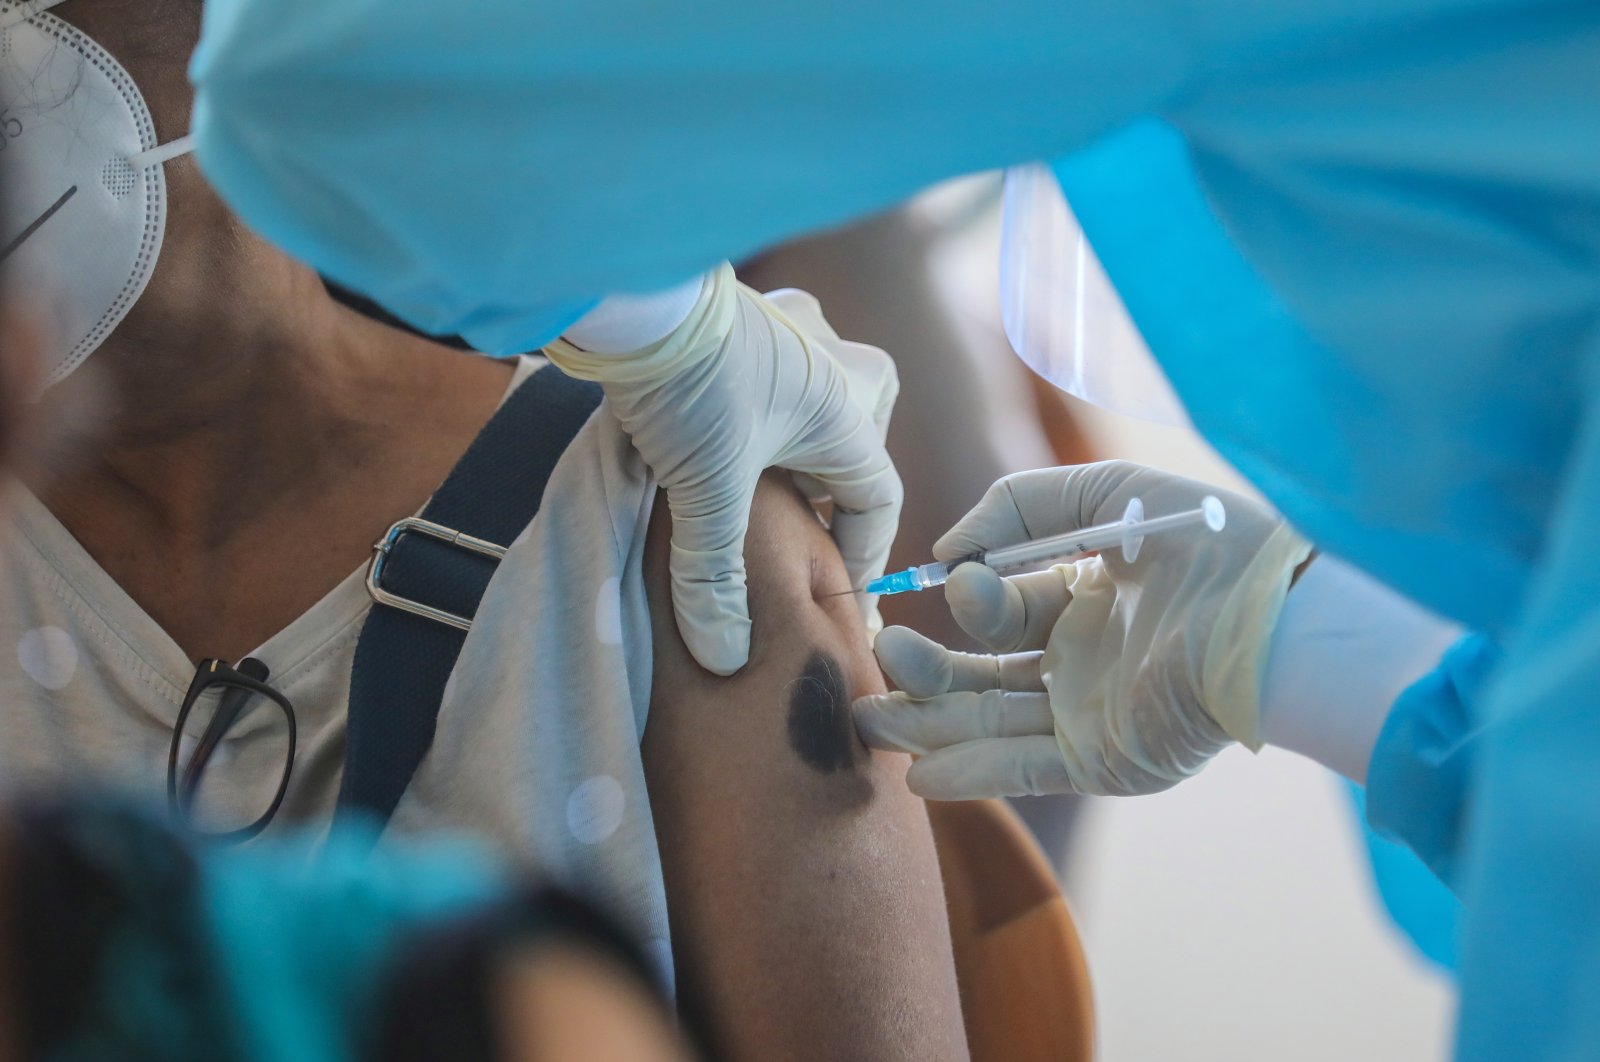 Senior citizens receive the booster dose of COVID-19 vaccine at a vaccination clinic in Colombo, Sri Lanka, Nov. 30, 2021. (EPA Photo)